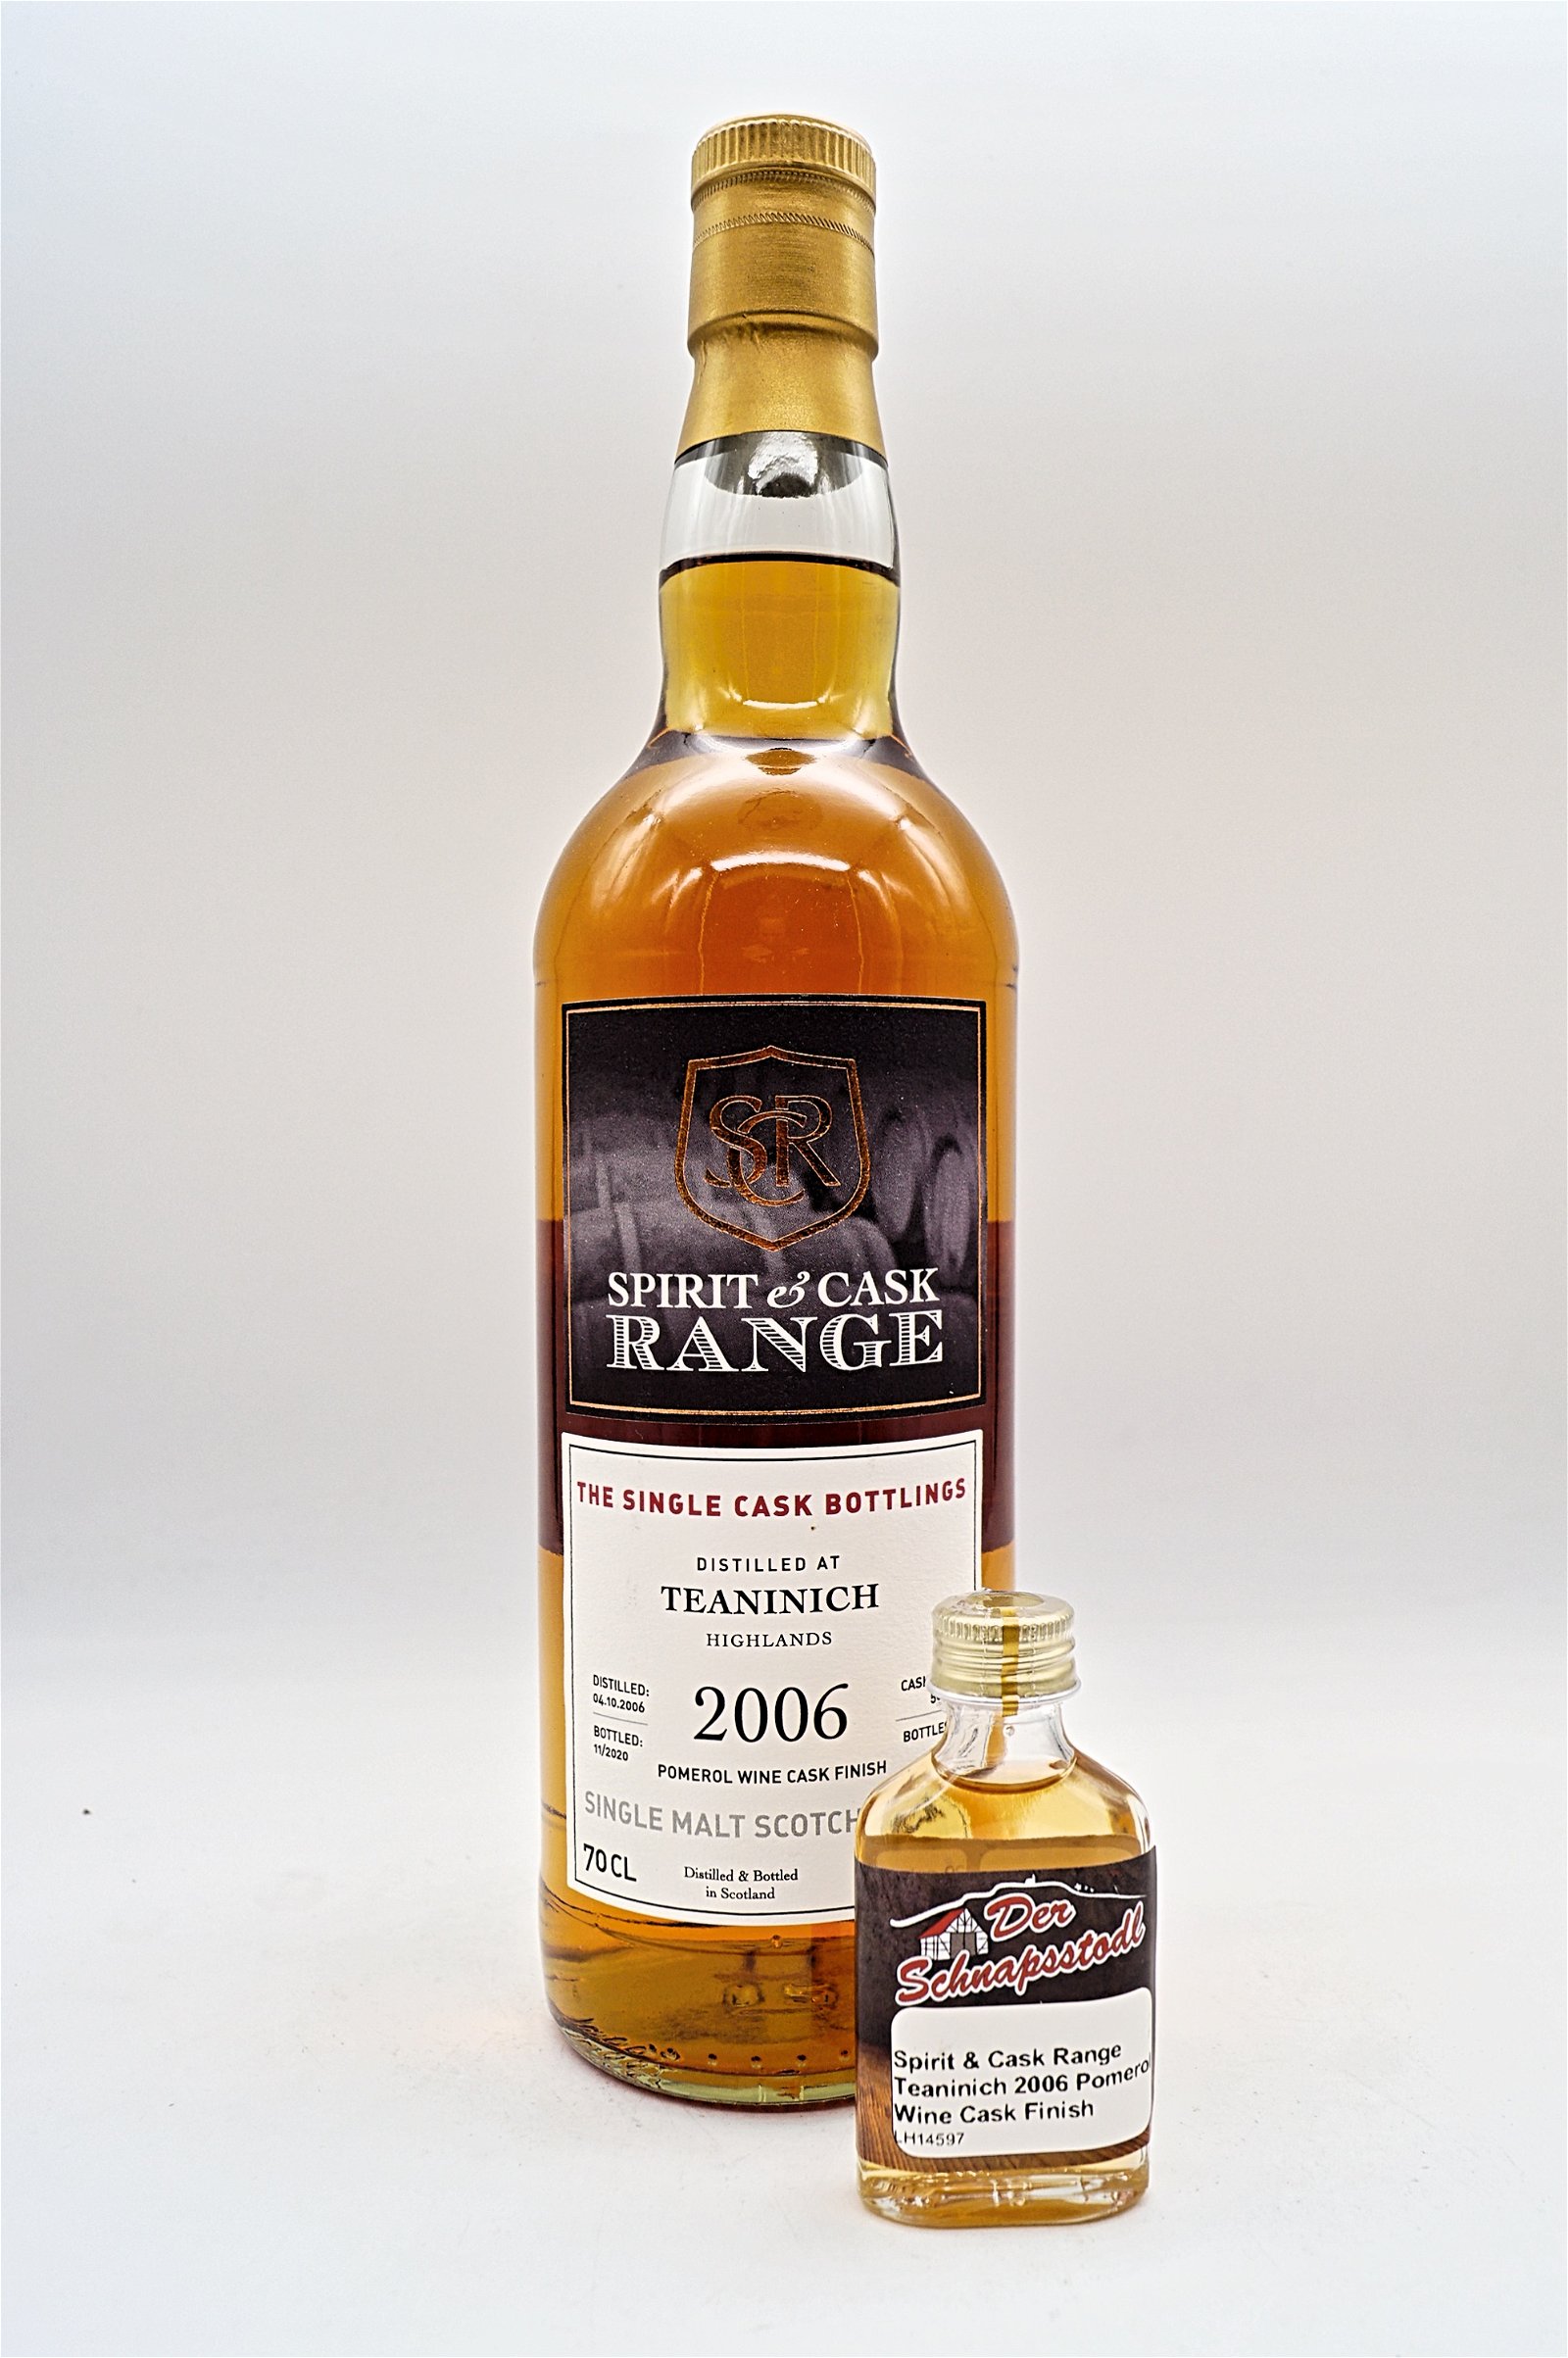 Spirit & Cask Range Teaninich 2006 Pomerol Wine Cask Finish Single Malt Scotch Whisky Sample 20 ml